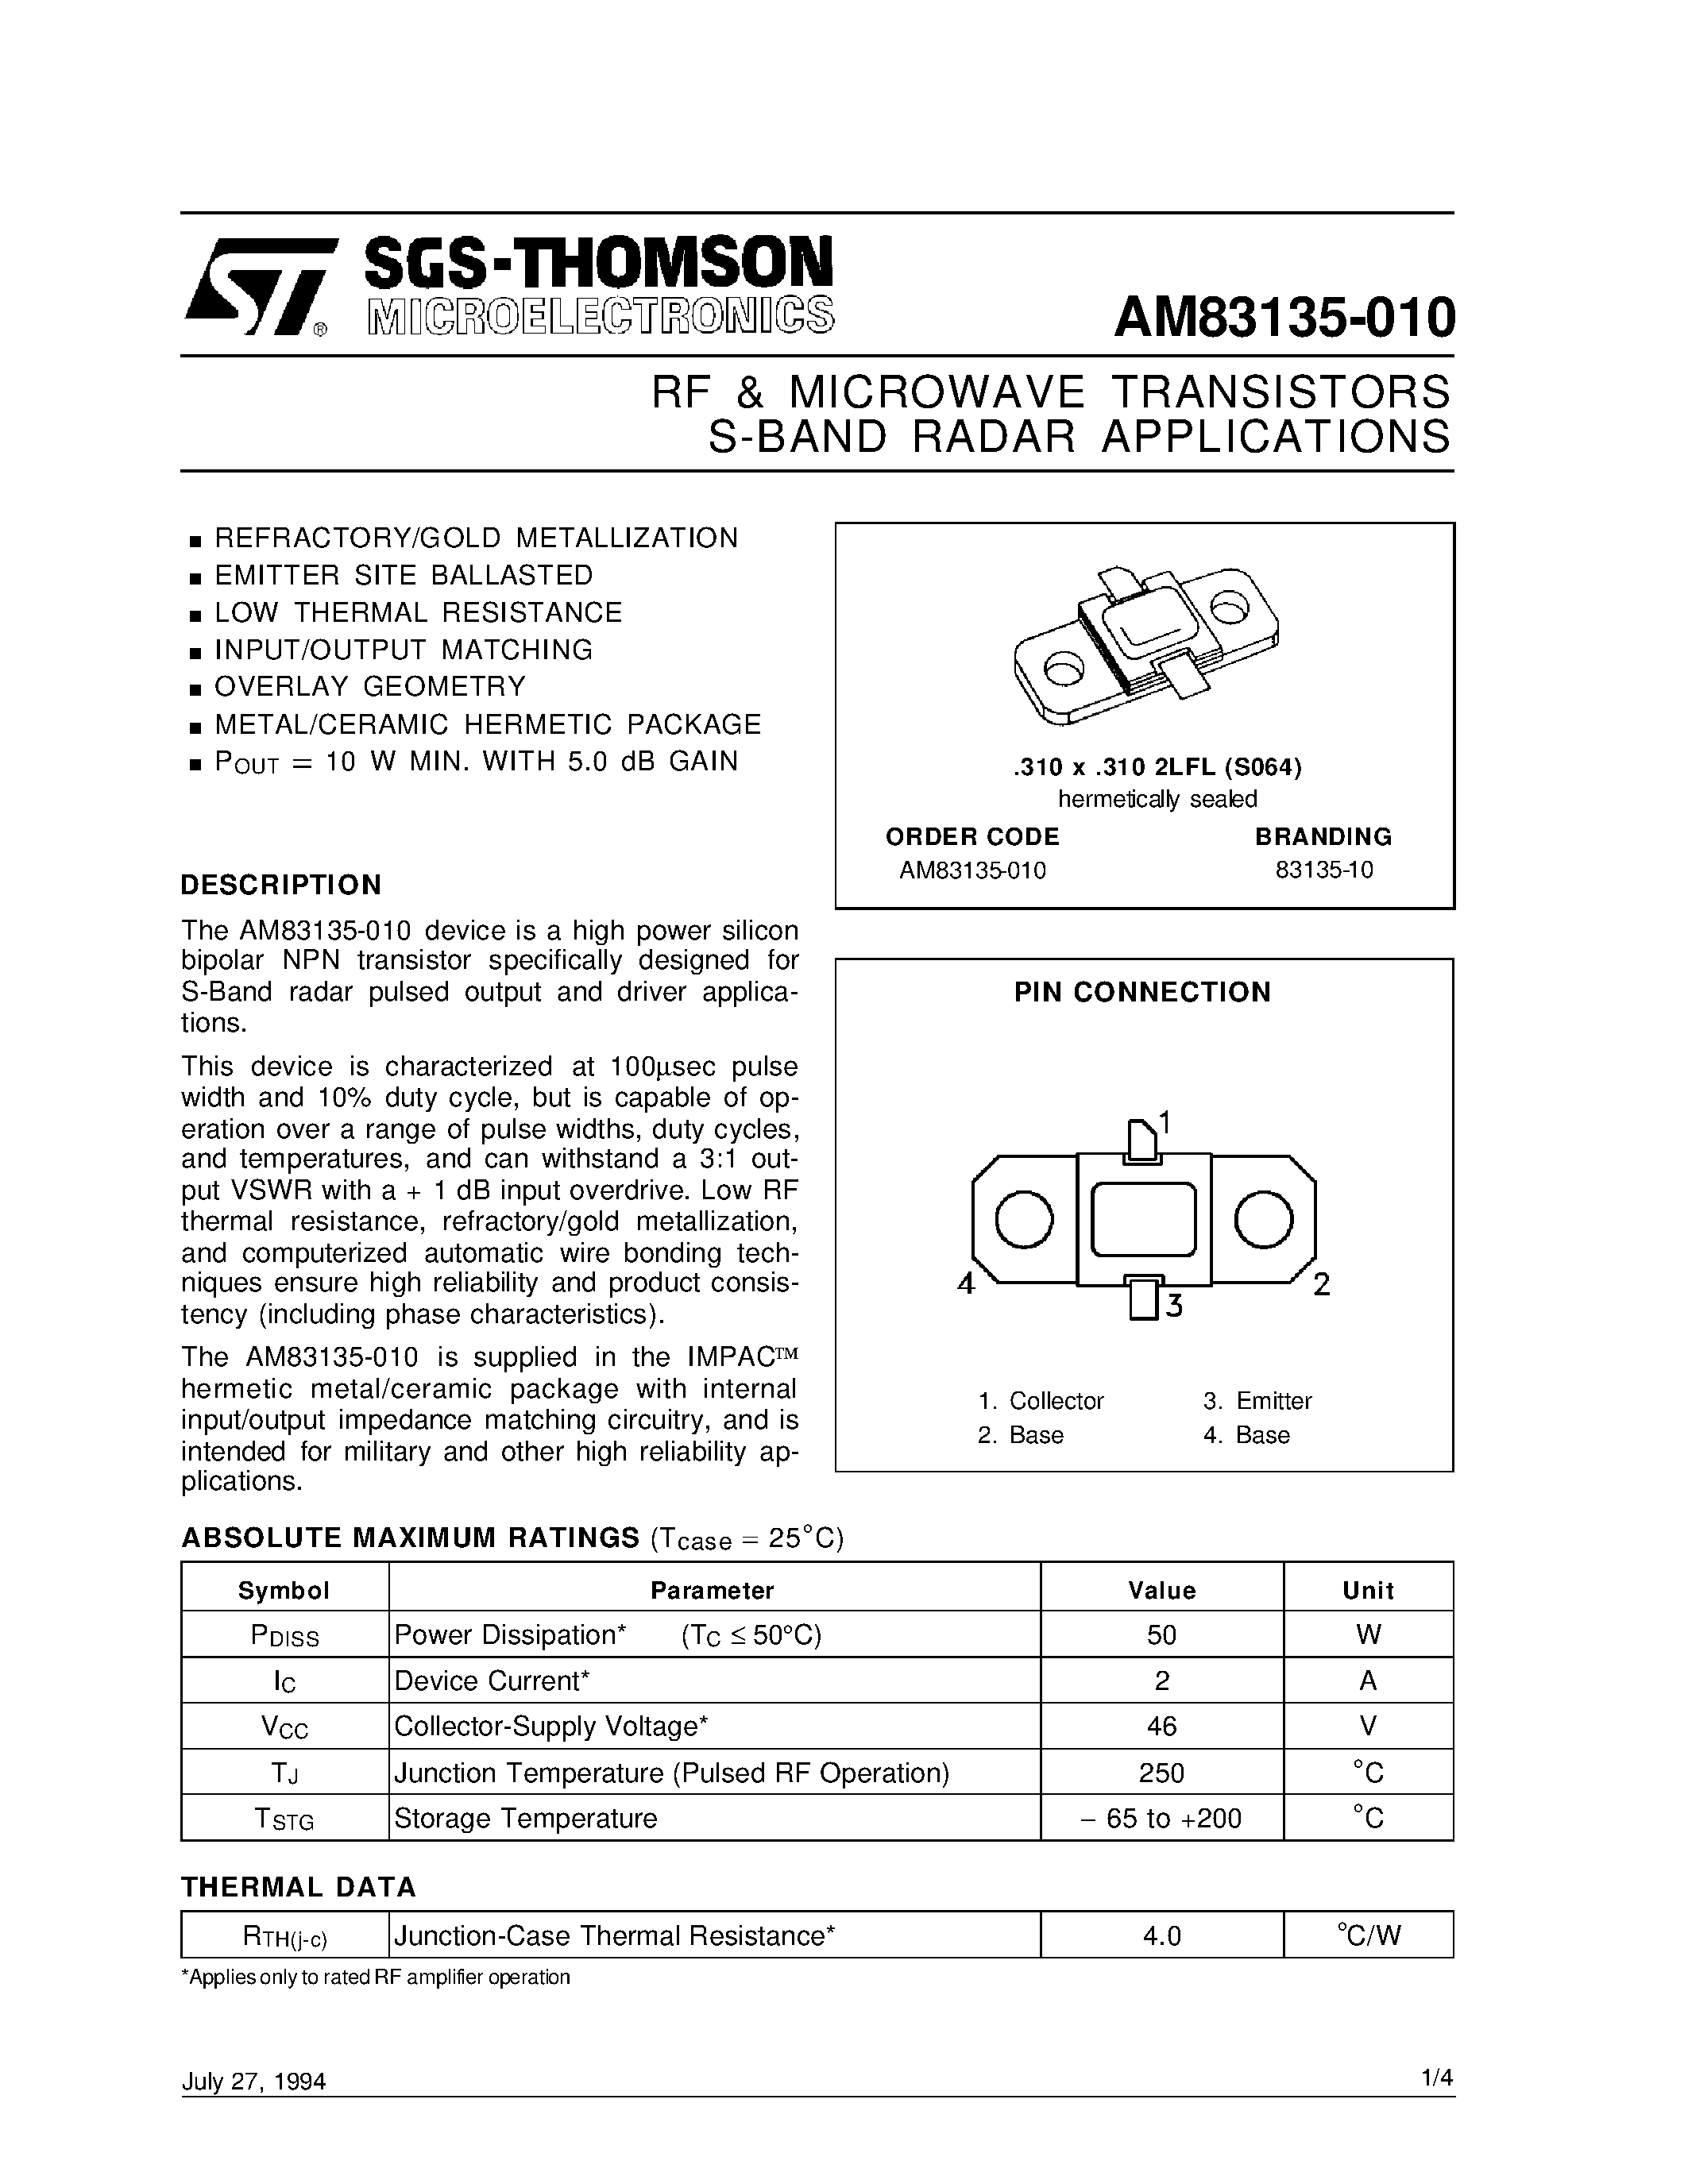 Datasheet AM83135-010 - RF & MICROWAVE TRANSISTORS S-BAND RADAR APPLICATIONS page 1